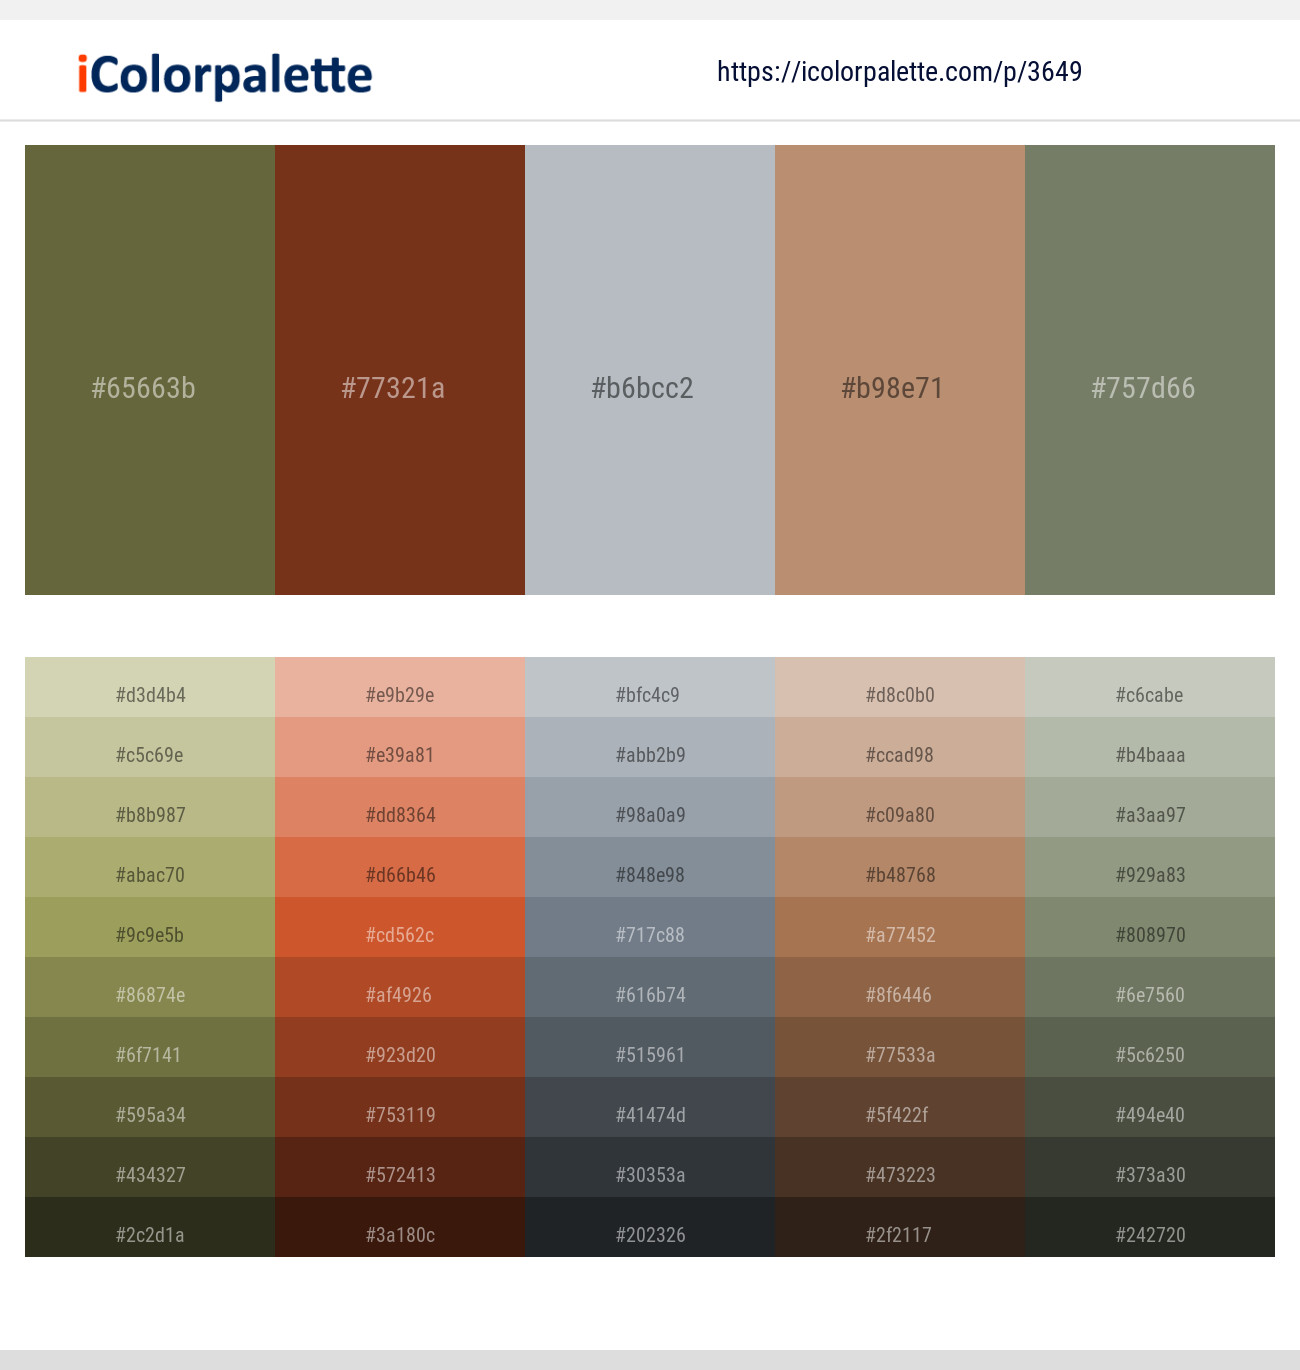 https://icolorpalette.com/download/palette/3649_color_palette.jpg